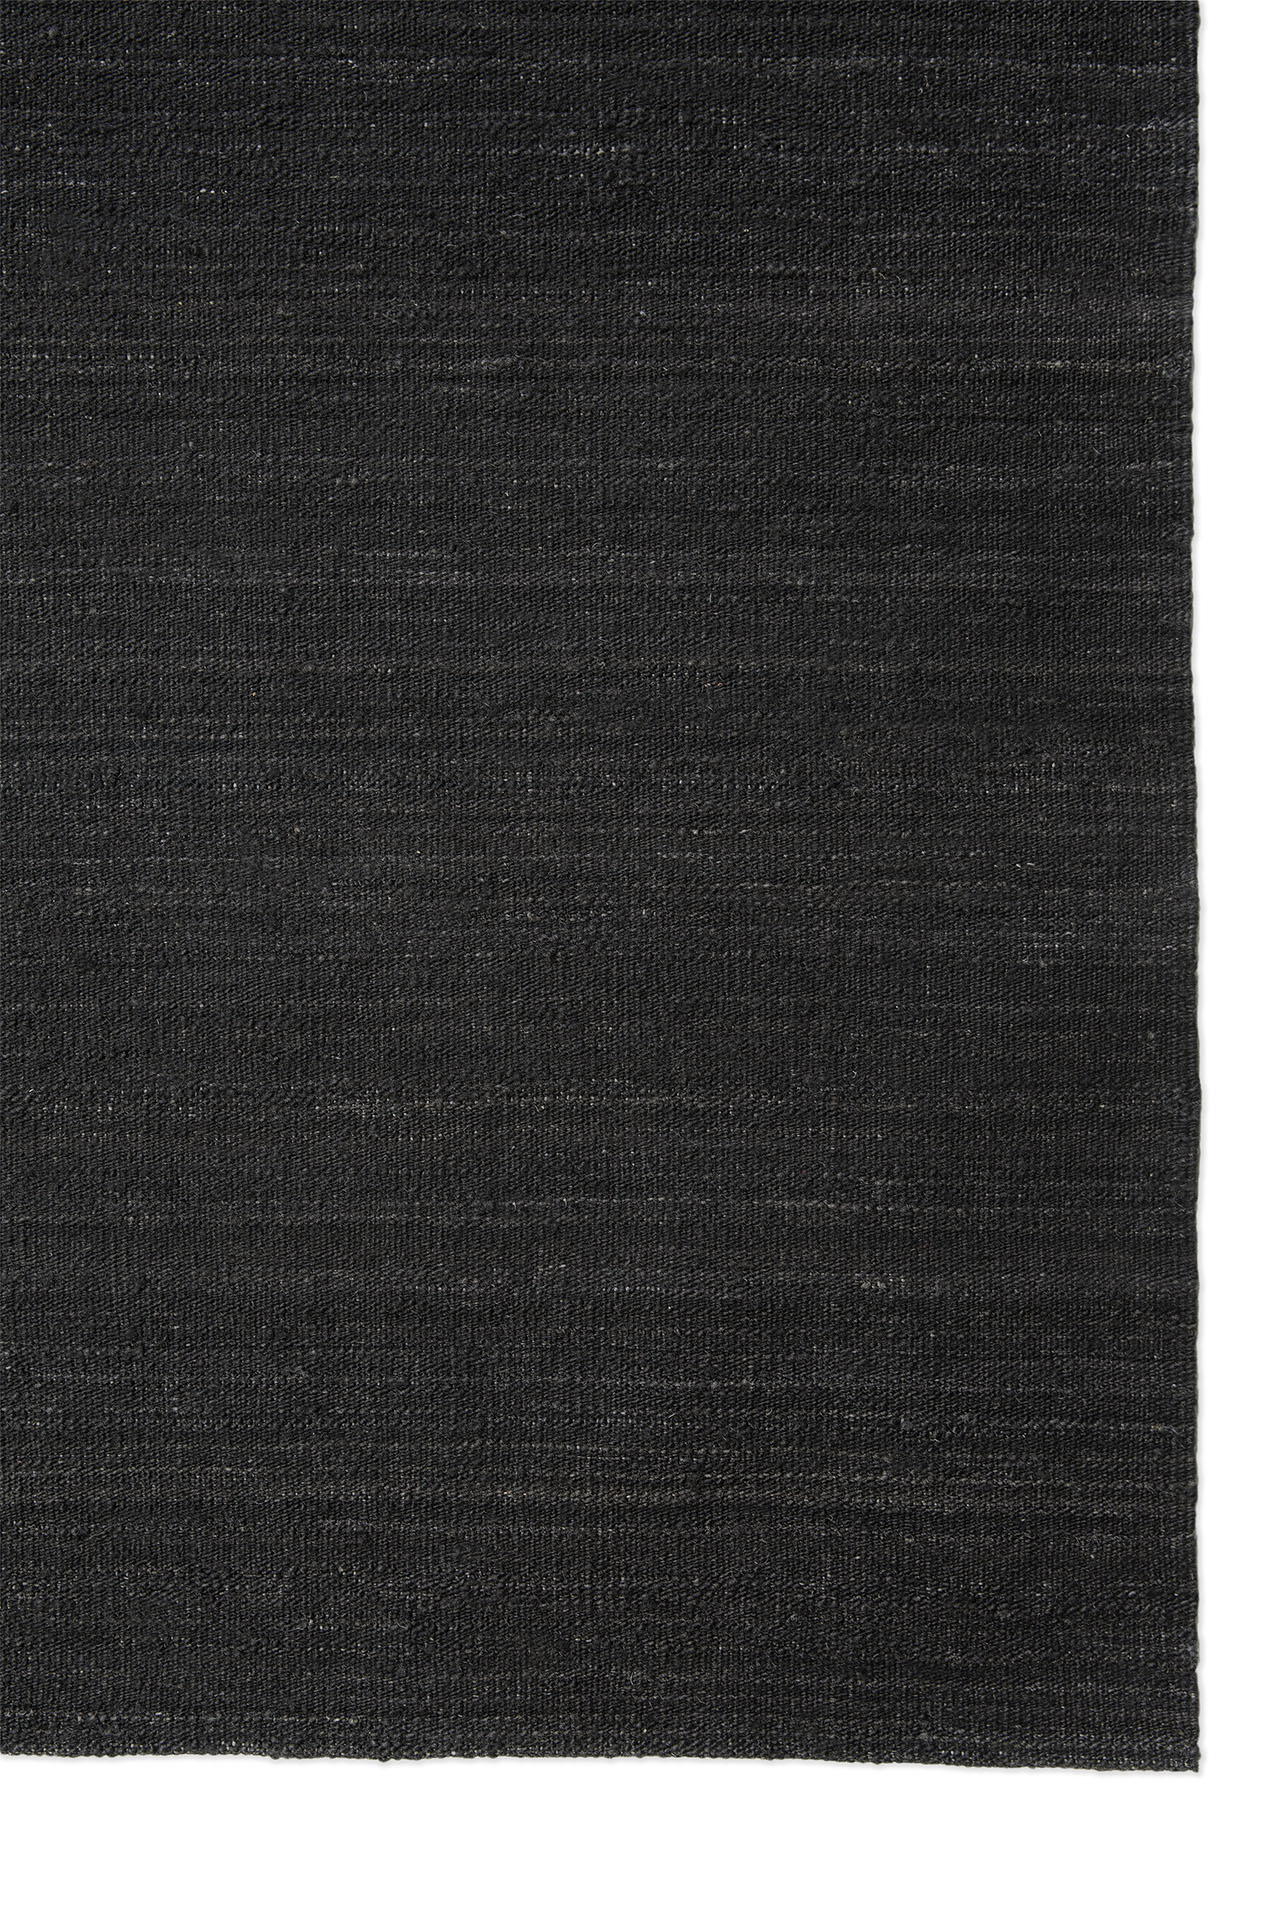 Ethnicraft - Nomad Dark Chocolate kilim tapijt (170 x 240 x 1 cm)